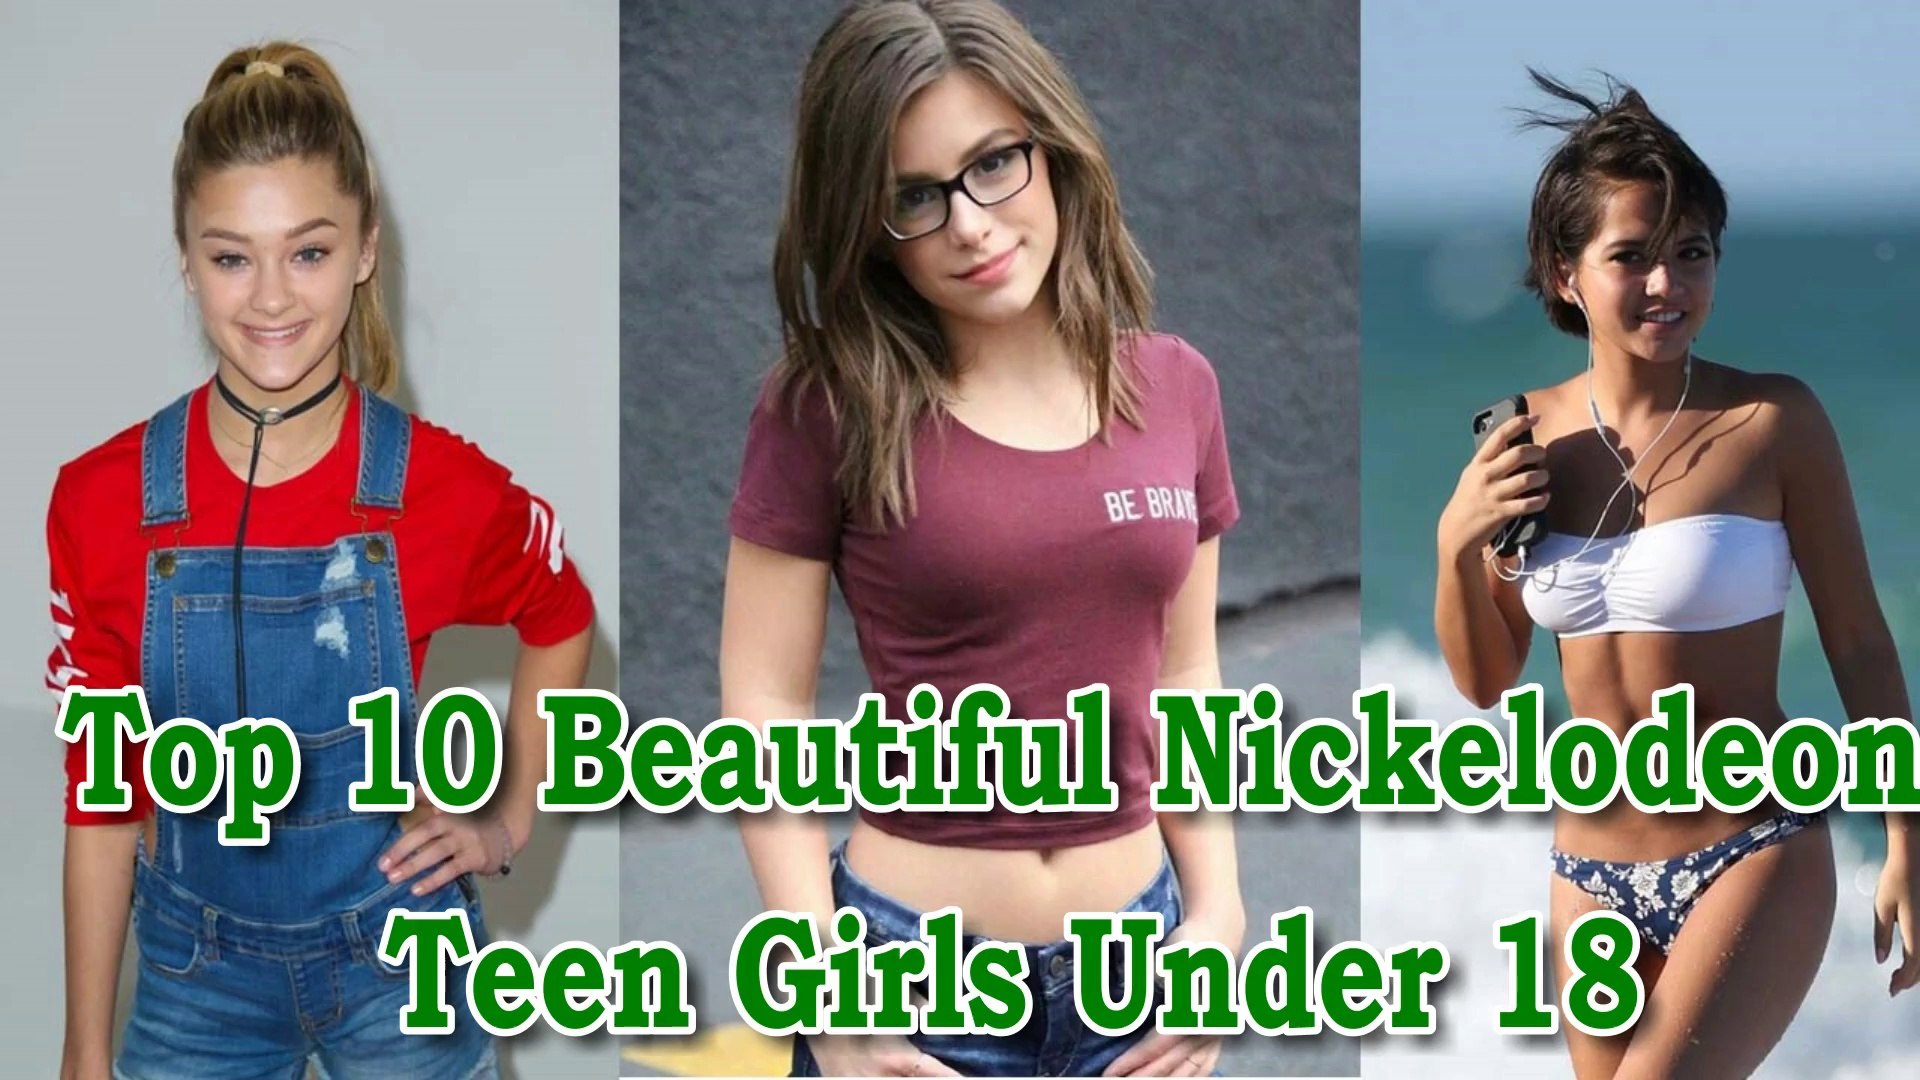 Real 18 Teen Girls